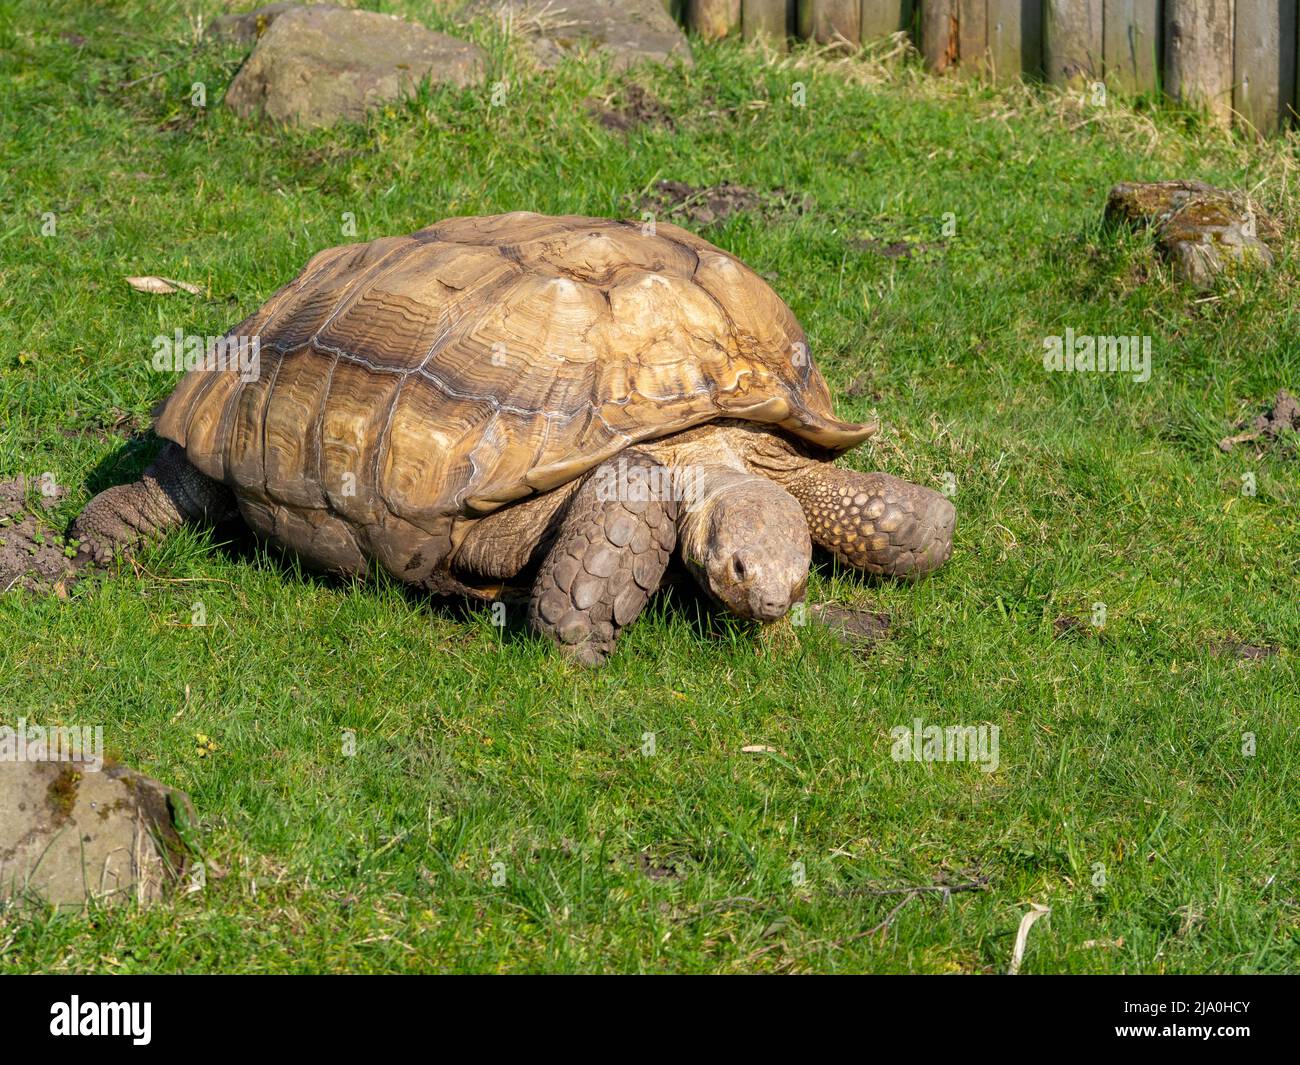 Giant tortoise taking a walk in the Springtime sunshine Stock Photo